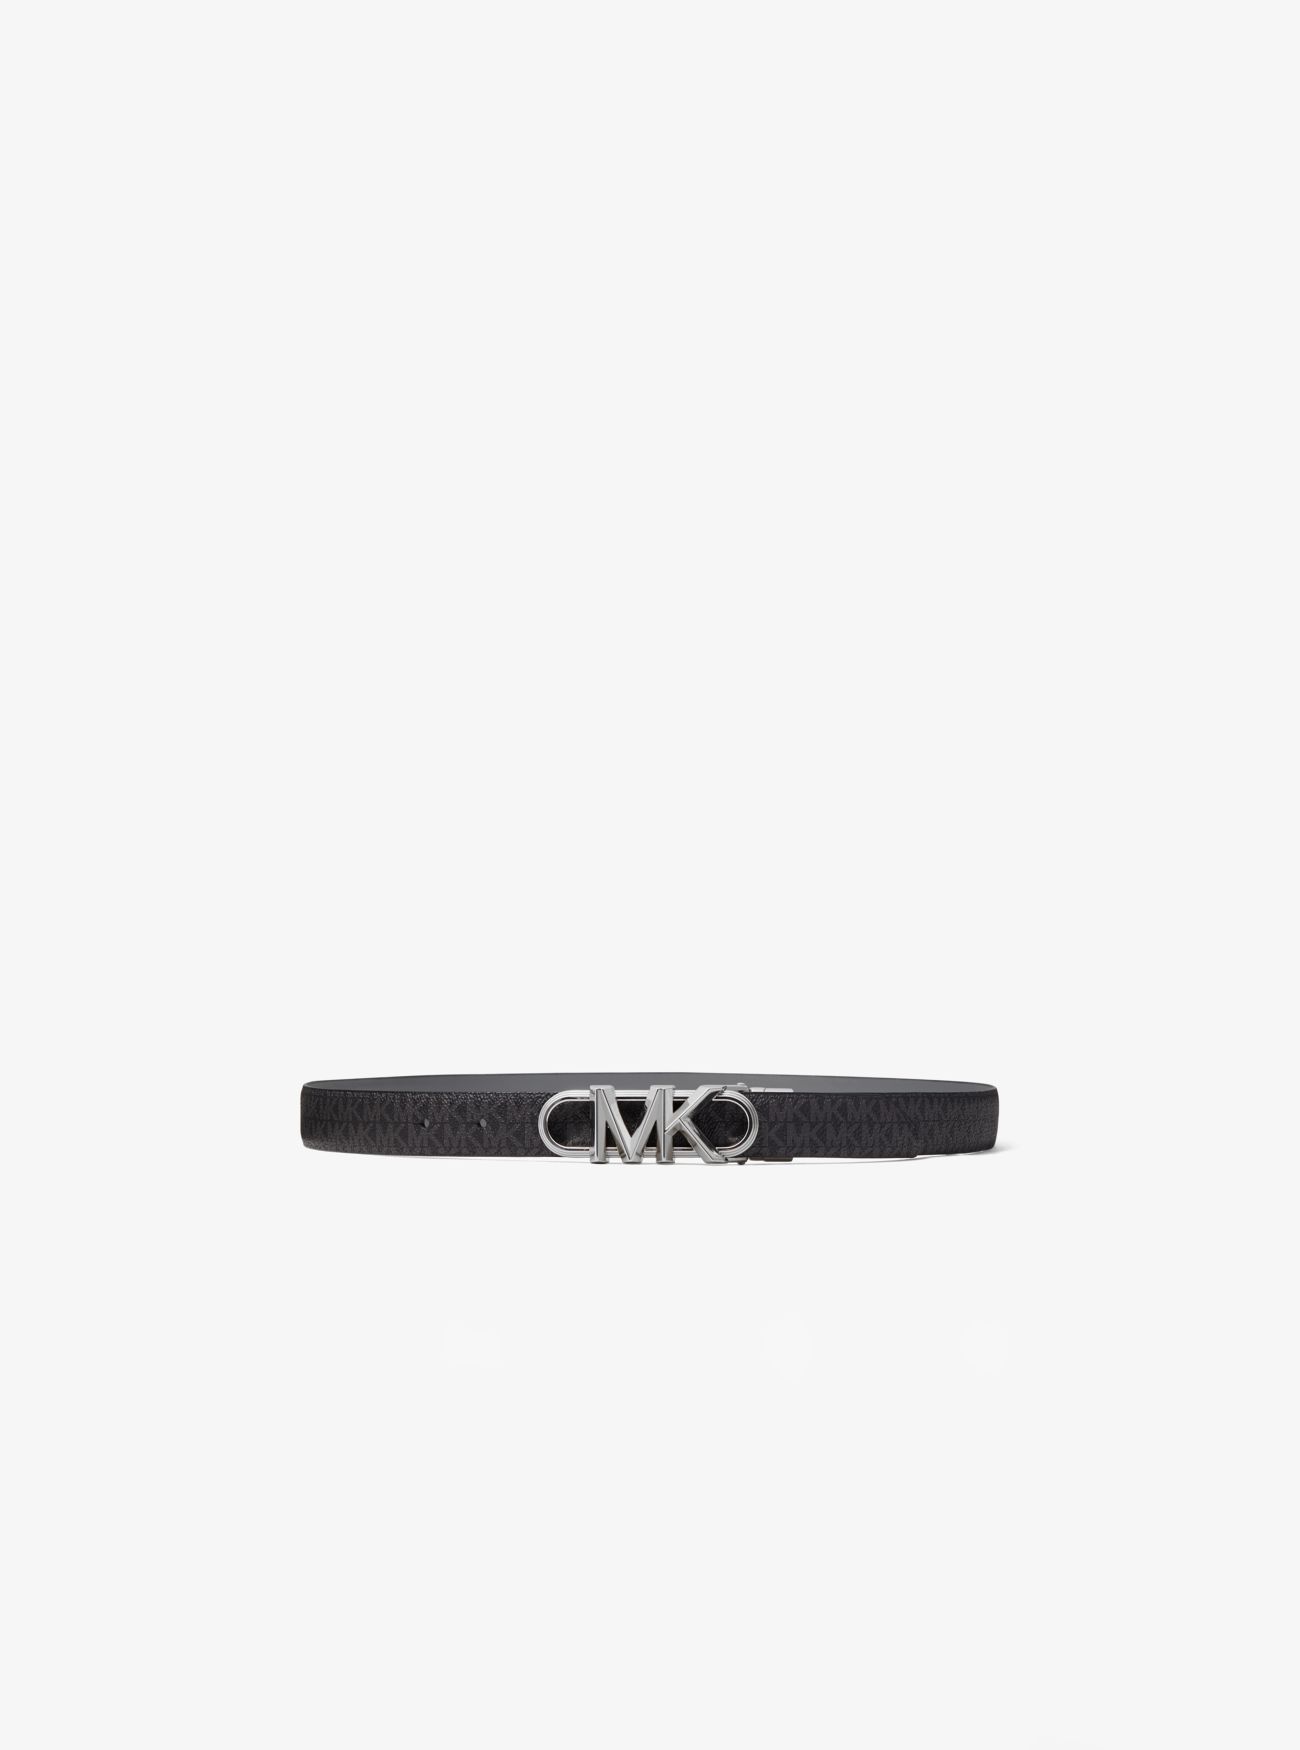 MK Reversible Logo and Leather Belt - Black/heather Grey - Michael Kors